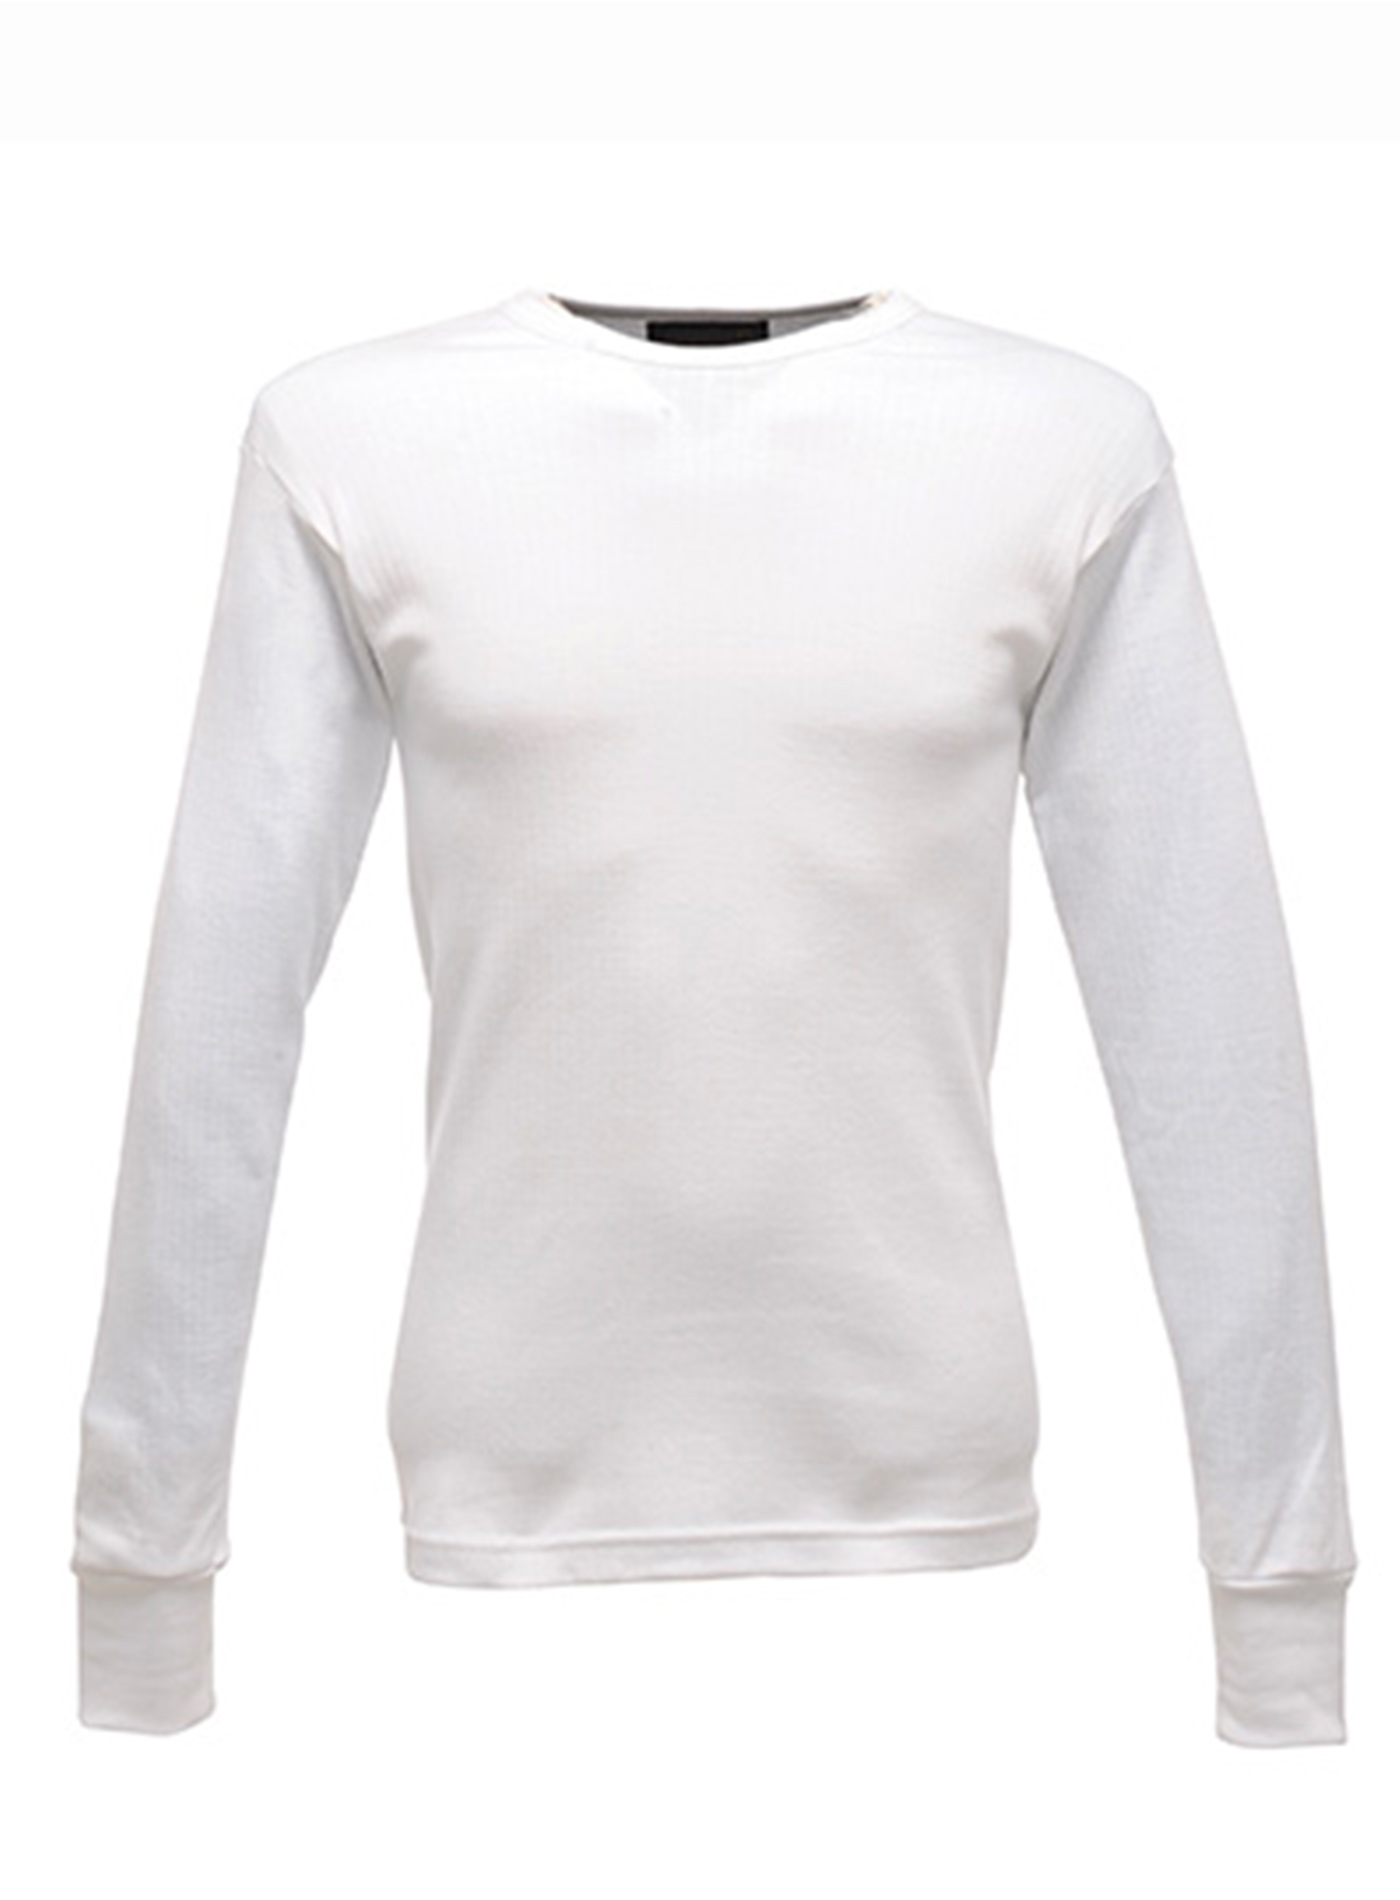 Pánské tričko Regata Profesional Thermal - Bílá M